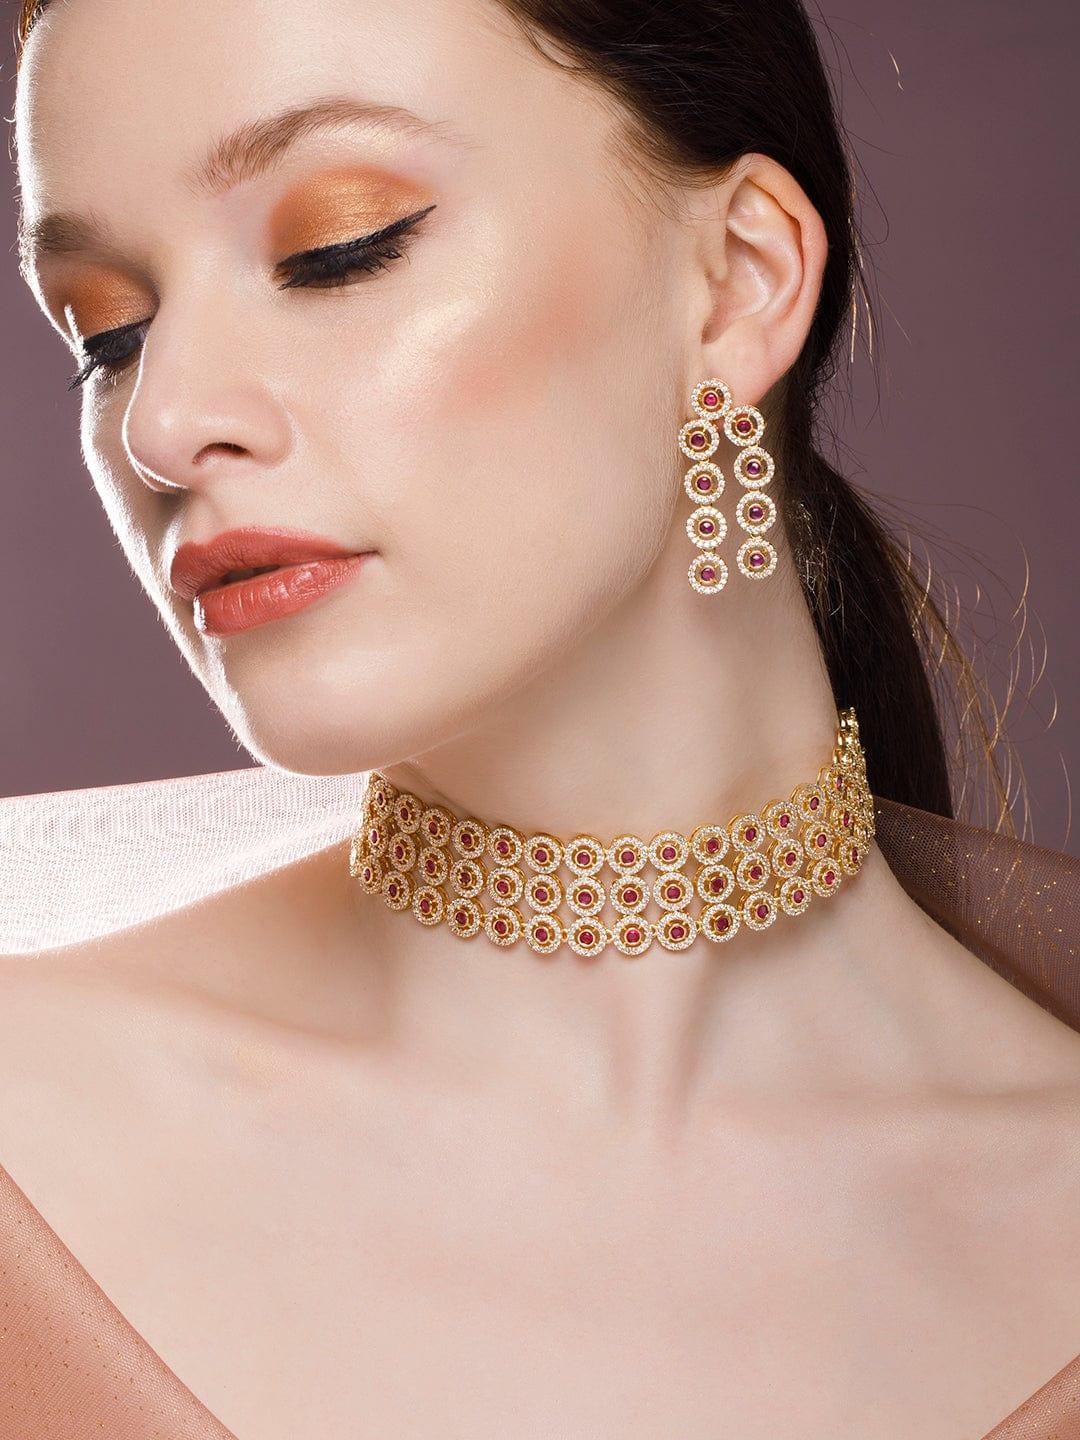 Rubans 22k Gold-Plated Ruby & AD Studded Choker Jewellery Set - Indiakreations